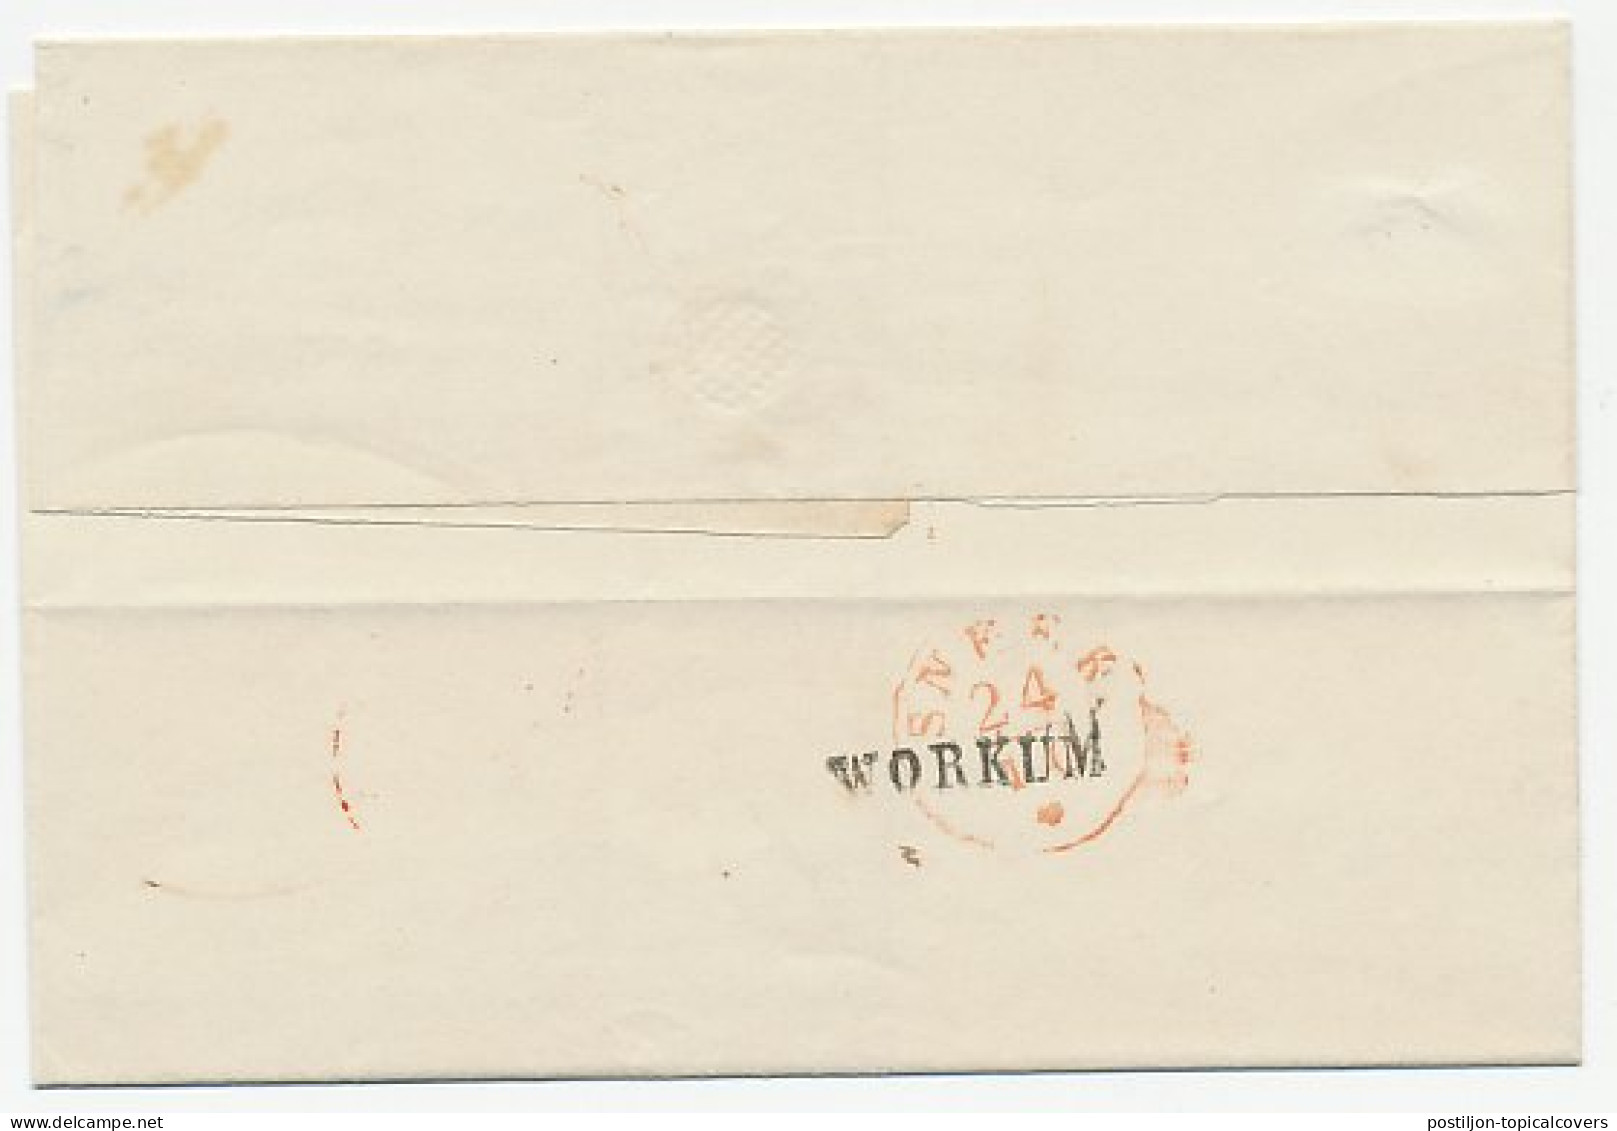 Naamstempel Workum 1851 - Briefe U. Dokumente